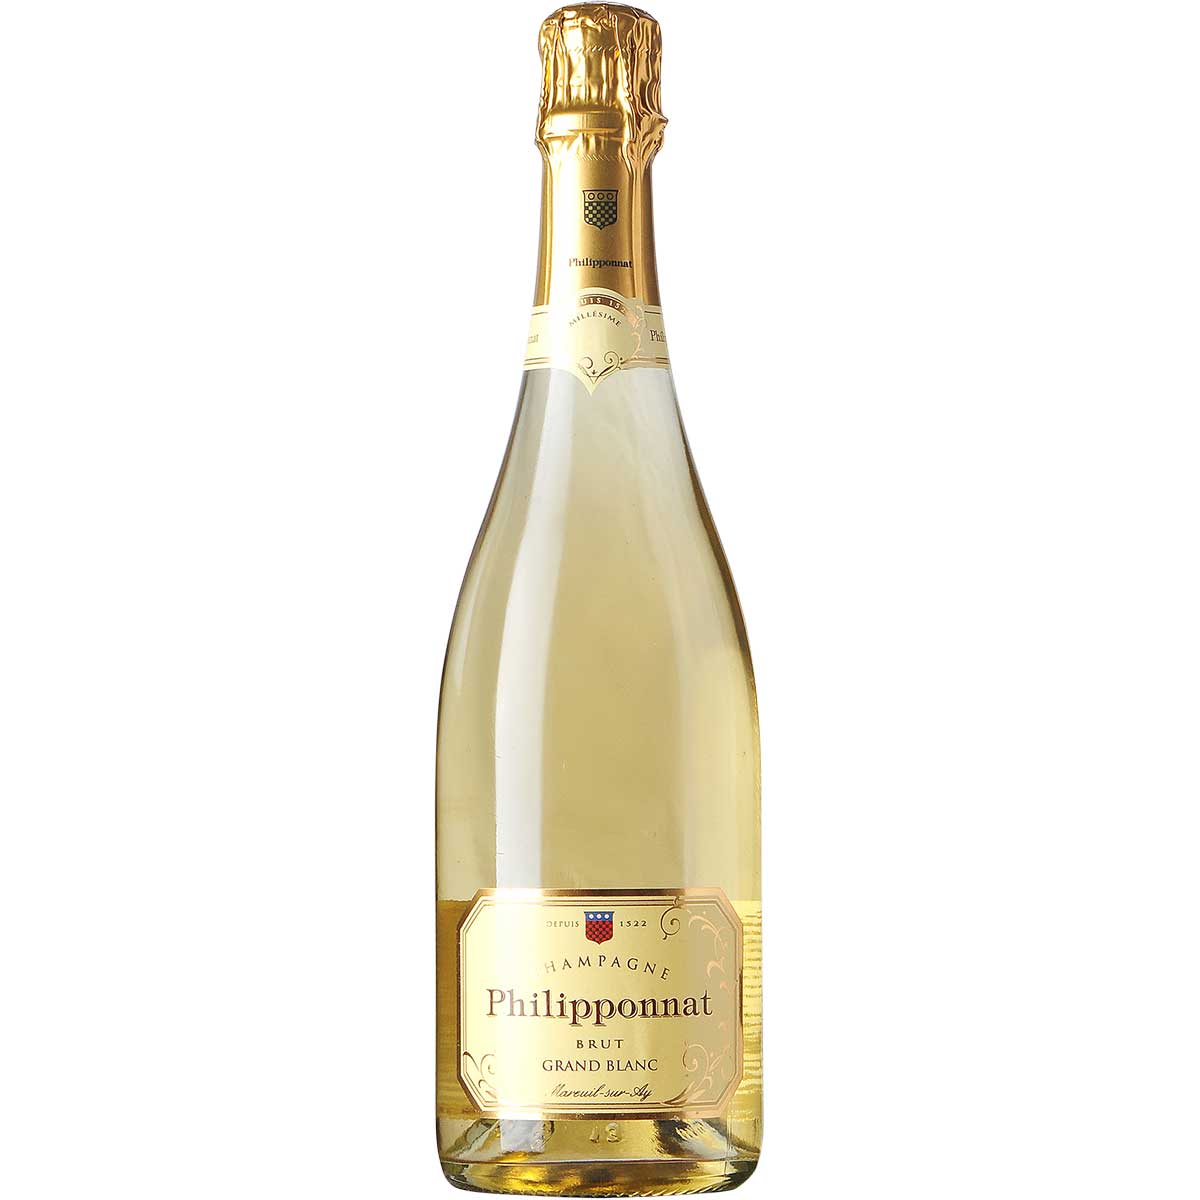 Philipponnat Grand Blanc Champagne 2014